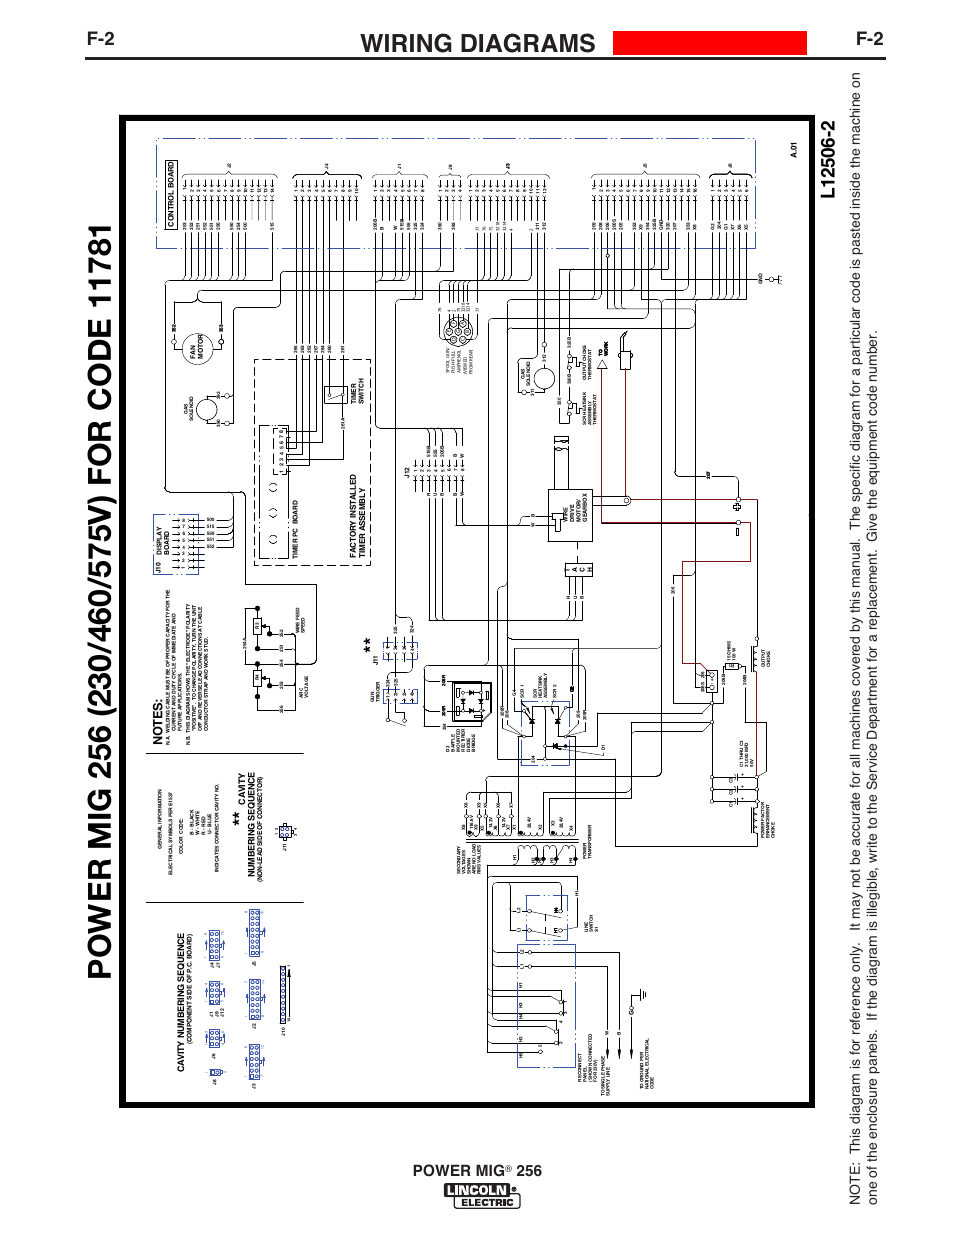 Wiring diagrams, Enhanced diagram, Power mig | Lincoln ...